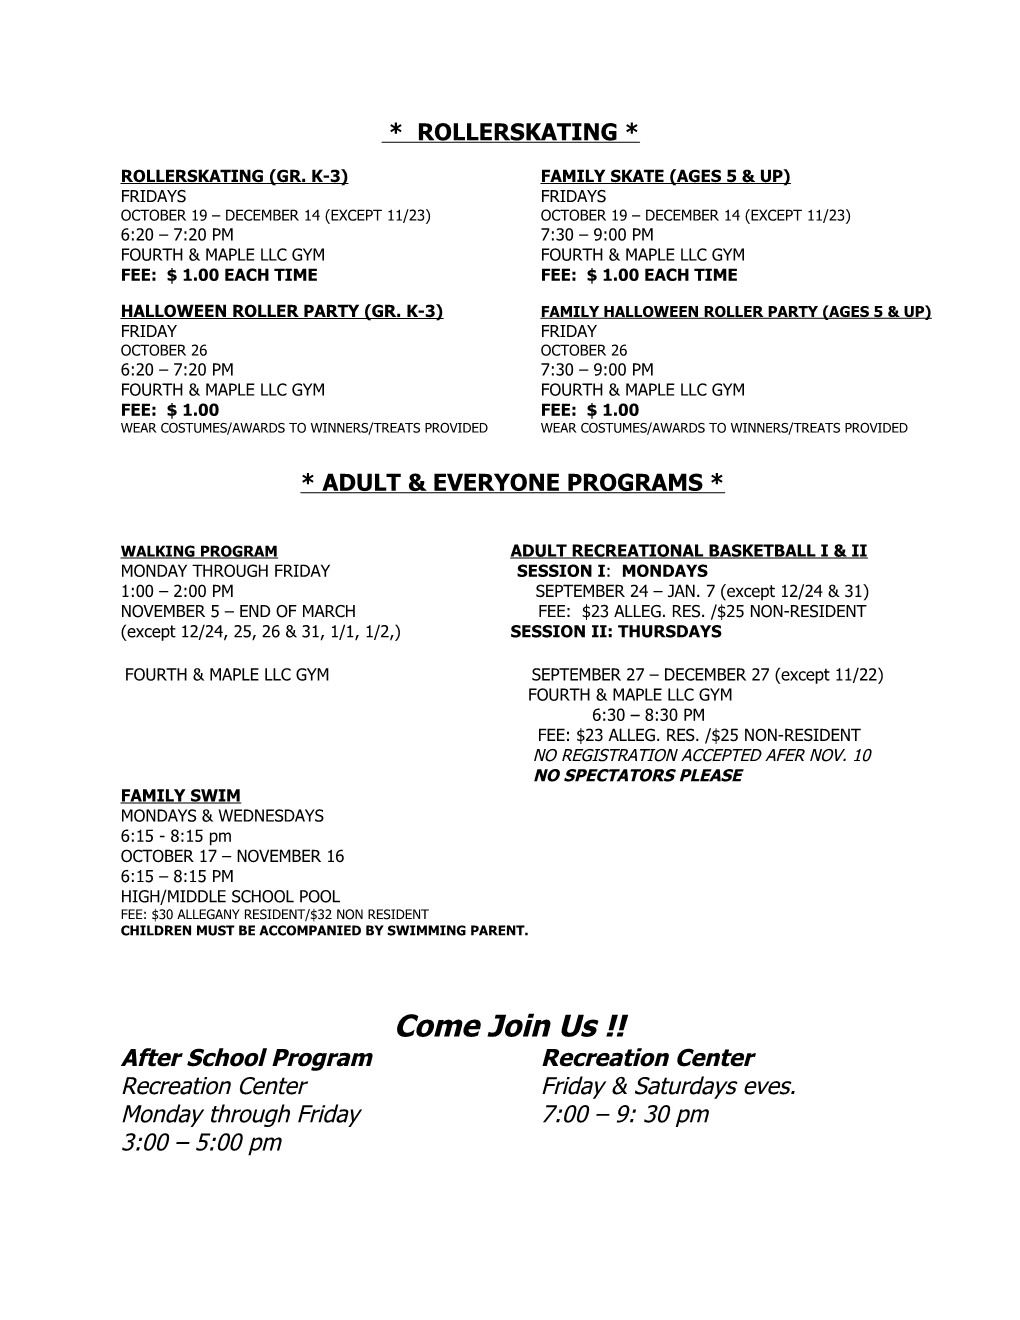 Allegany Recreation & Parks Fall 2000 Programs